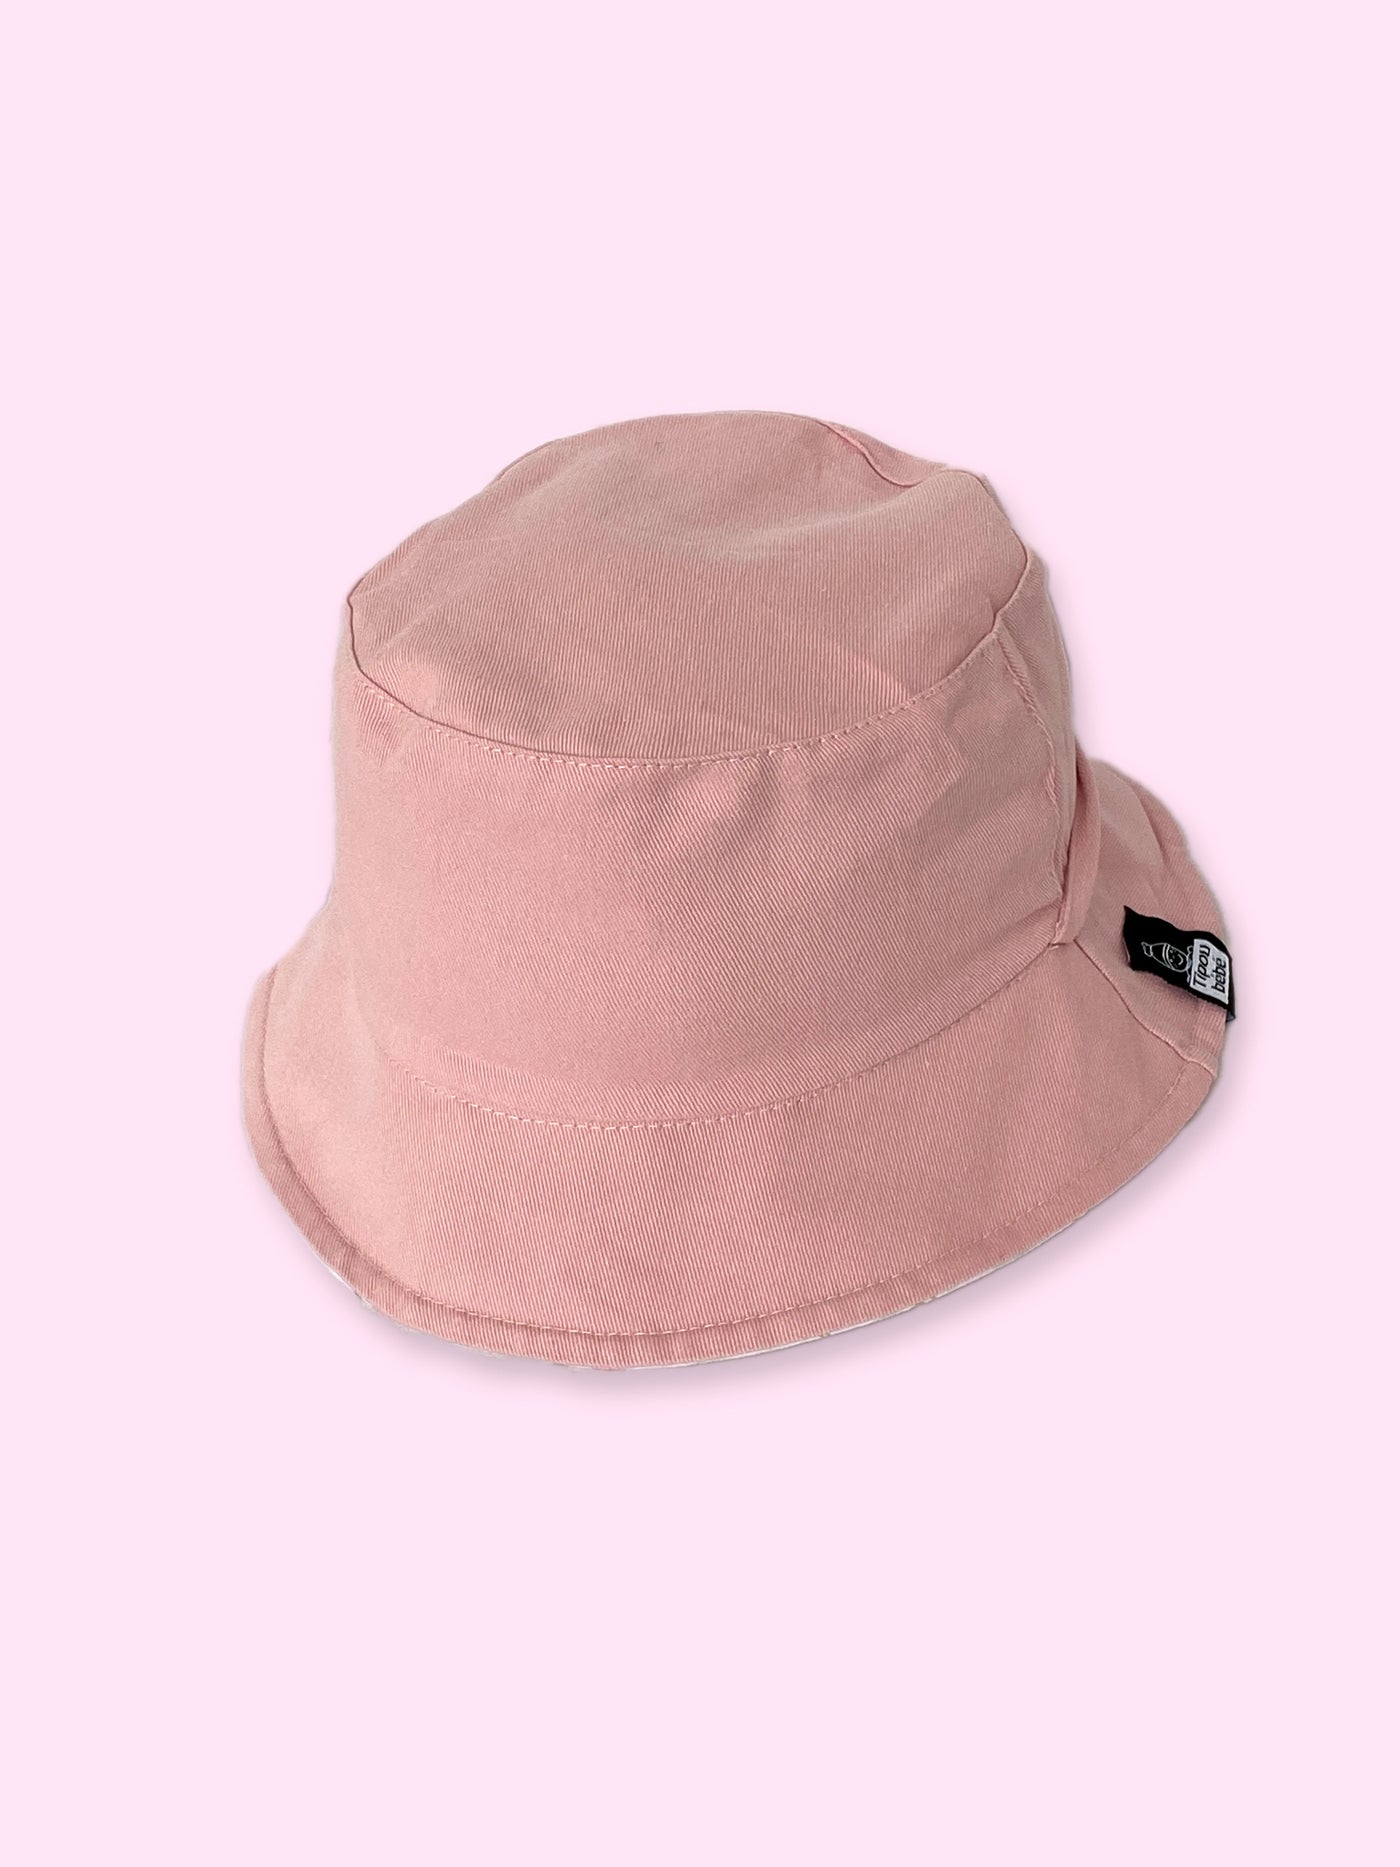 Reversible Bucket Hat : Pink Flamingos